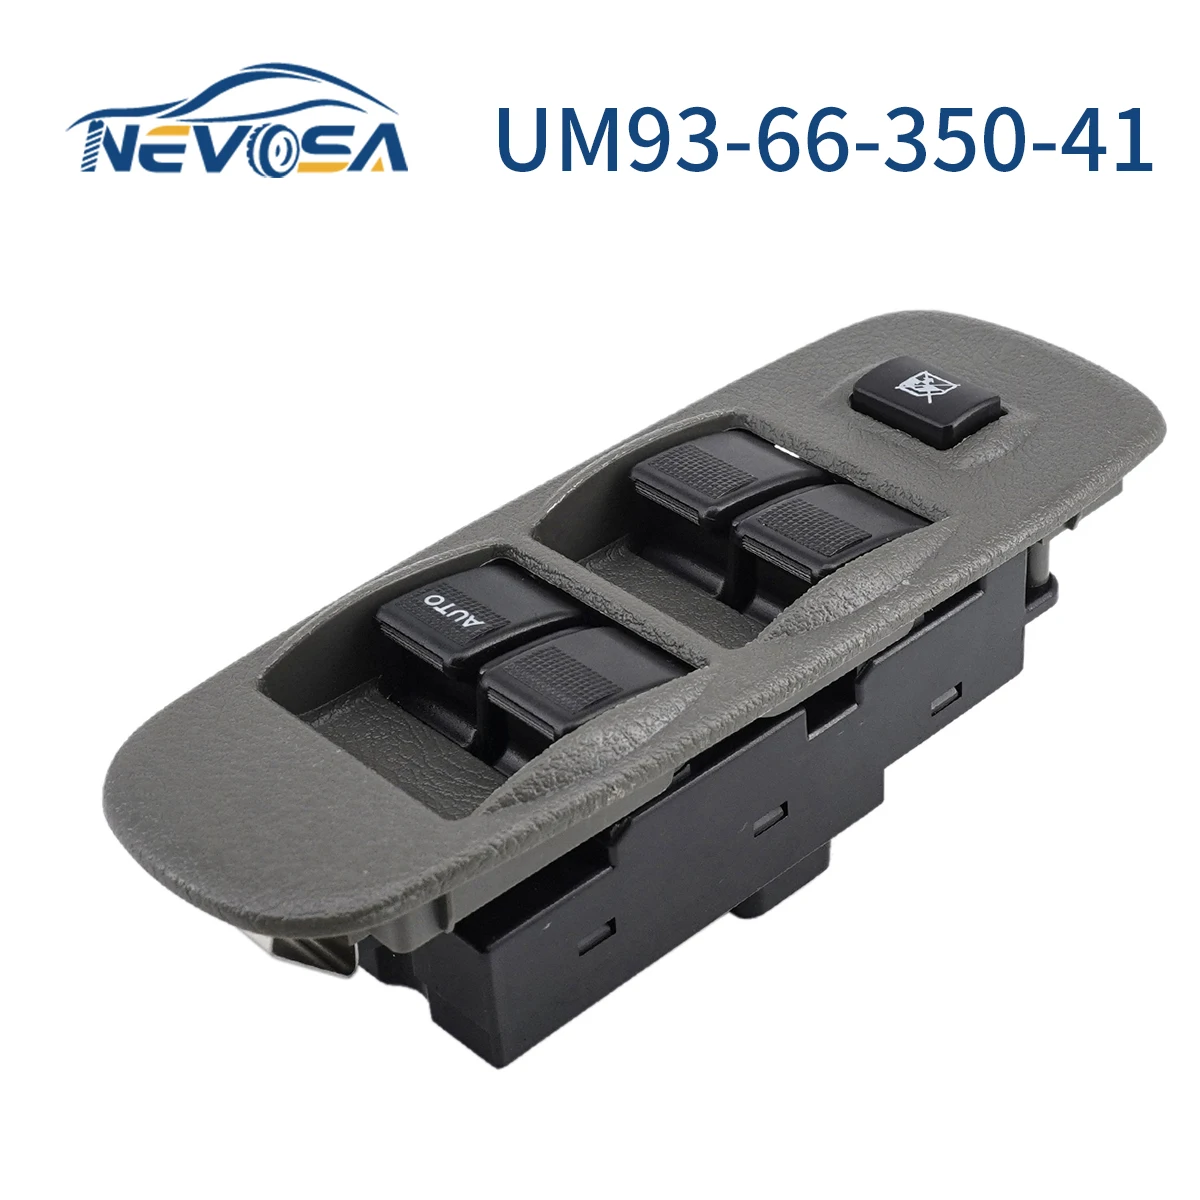 NEVOSA UM93-66-350 UM93-66-350-41 For Mazda B2500 Bravo UN Ranger Courier Power Window Switch Control Car Parts RHD Right Hand